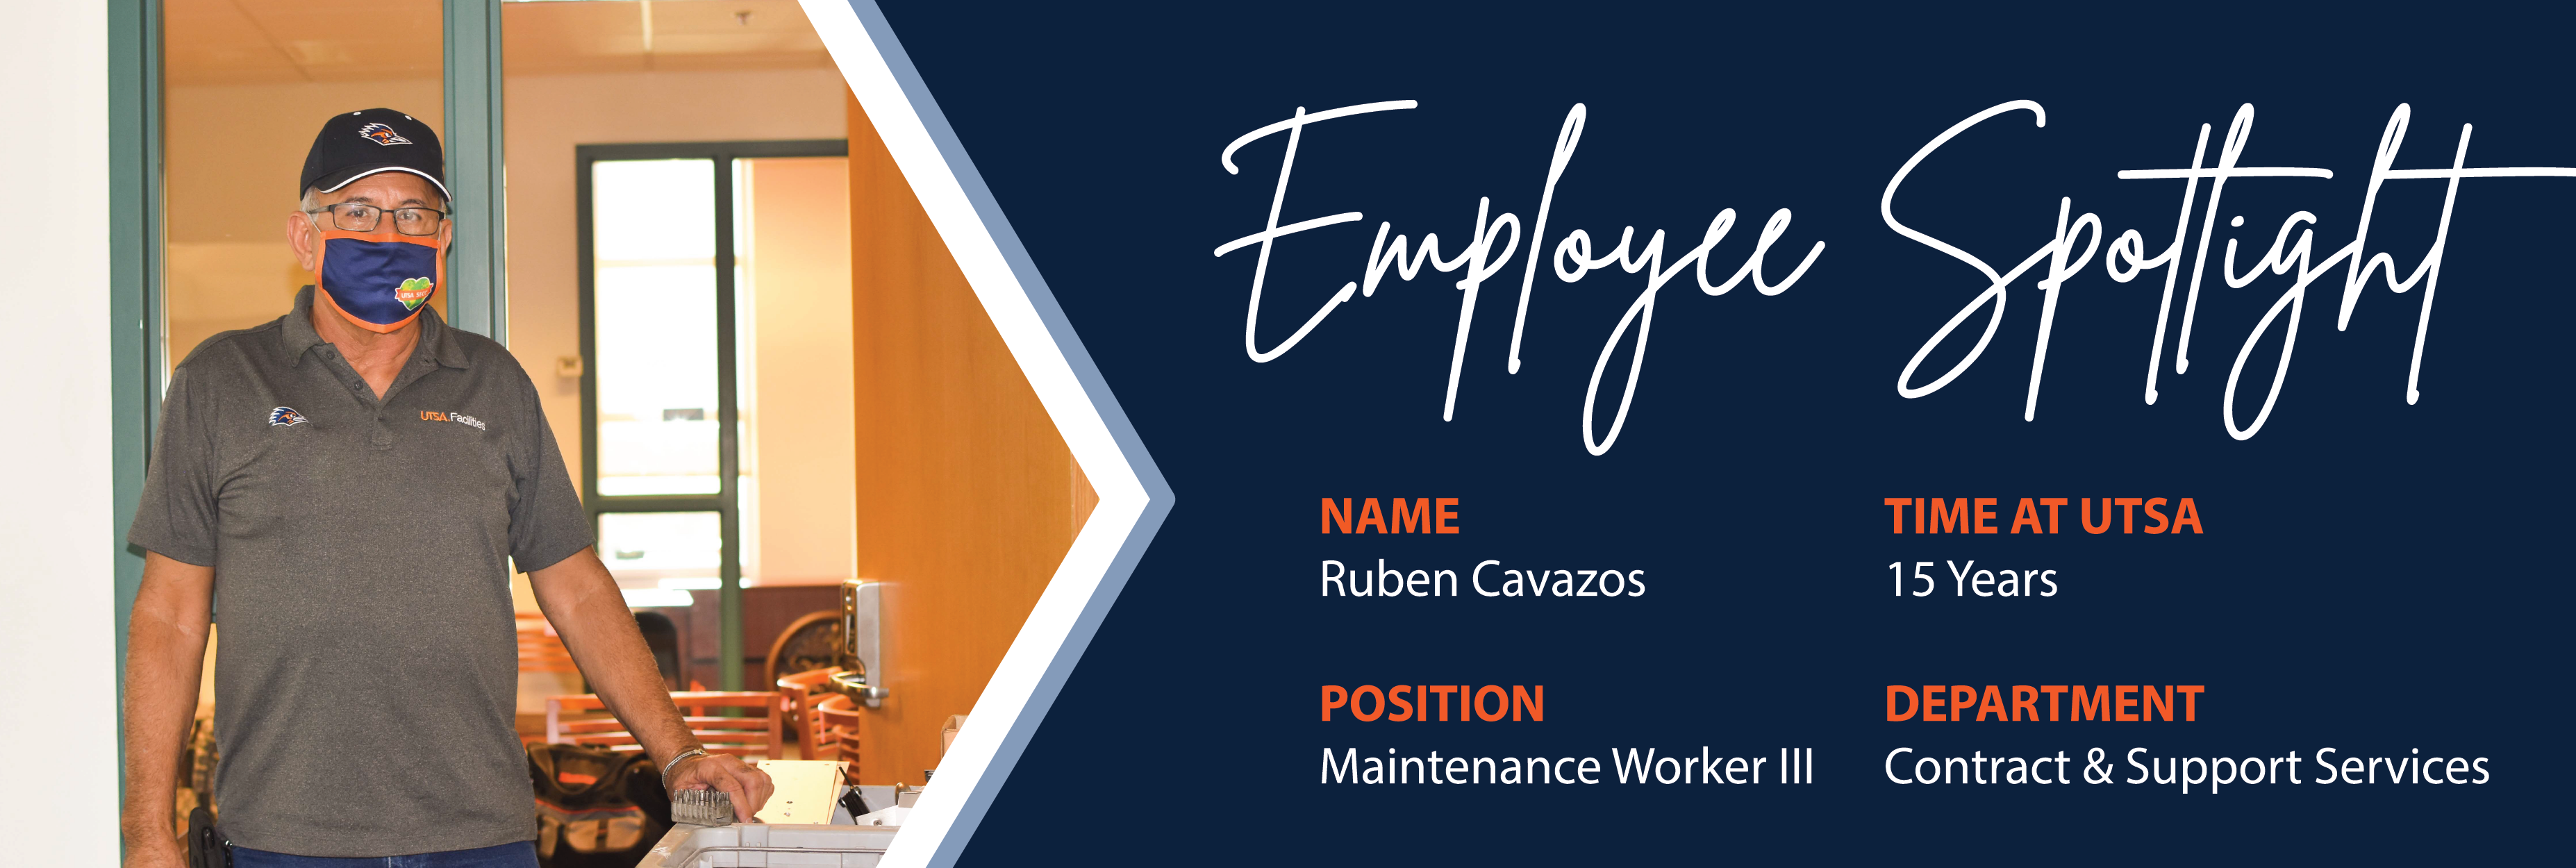 Employee Spotlight Ruben Cavazos